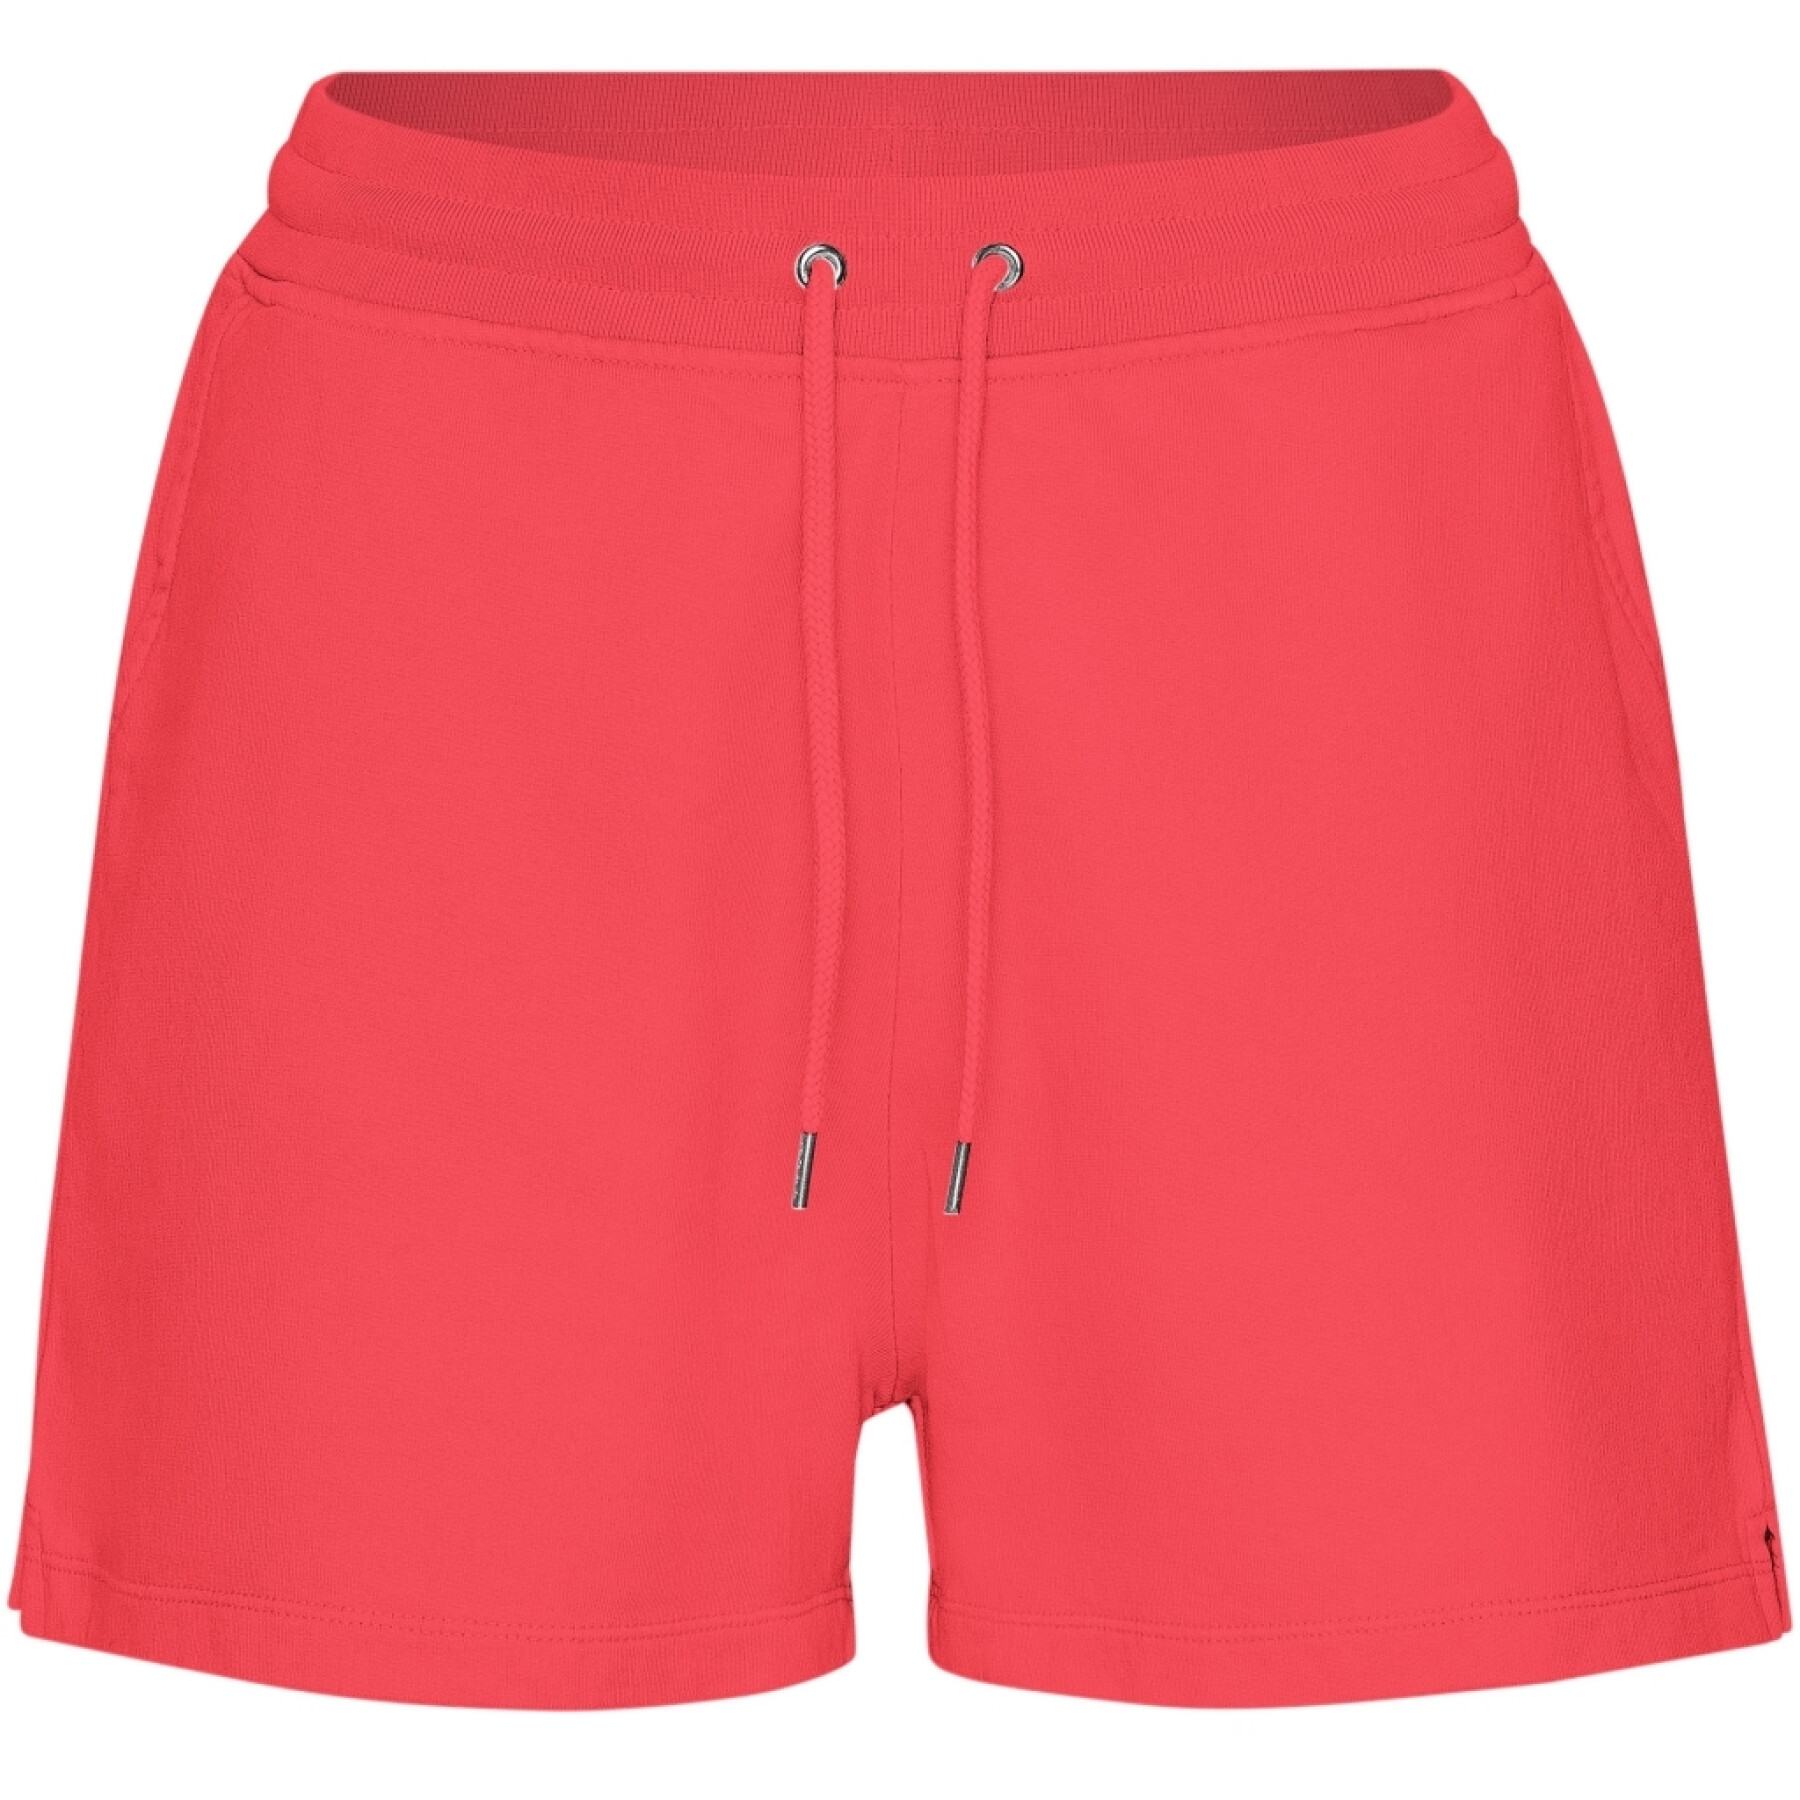 Women's shorts Colorful Standard Organic Red Tangerine